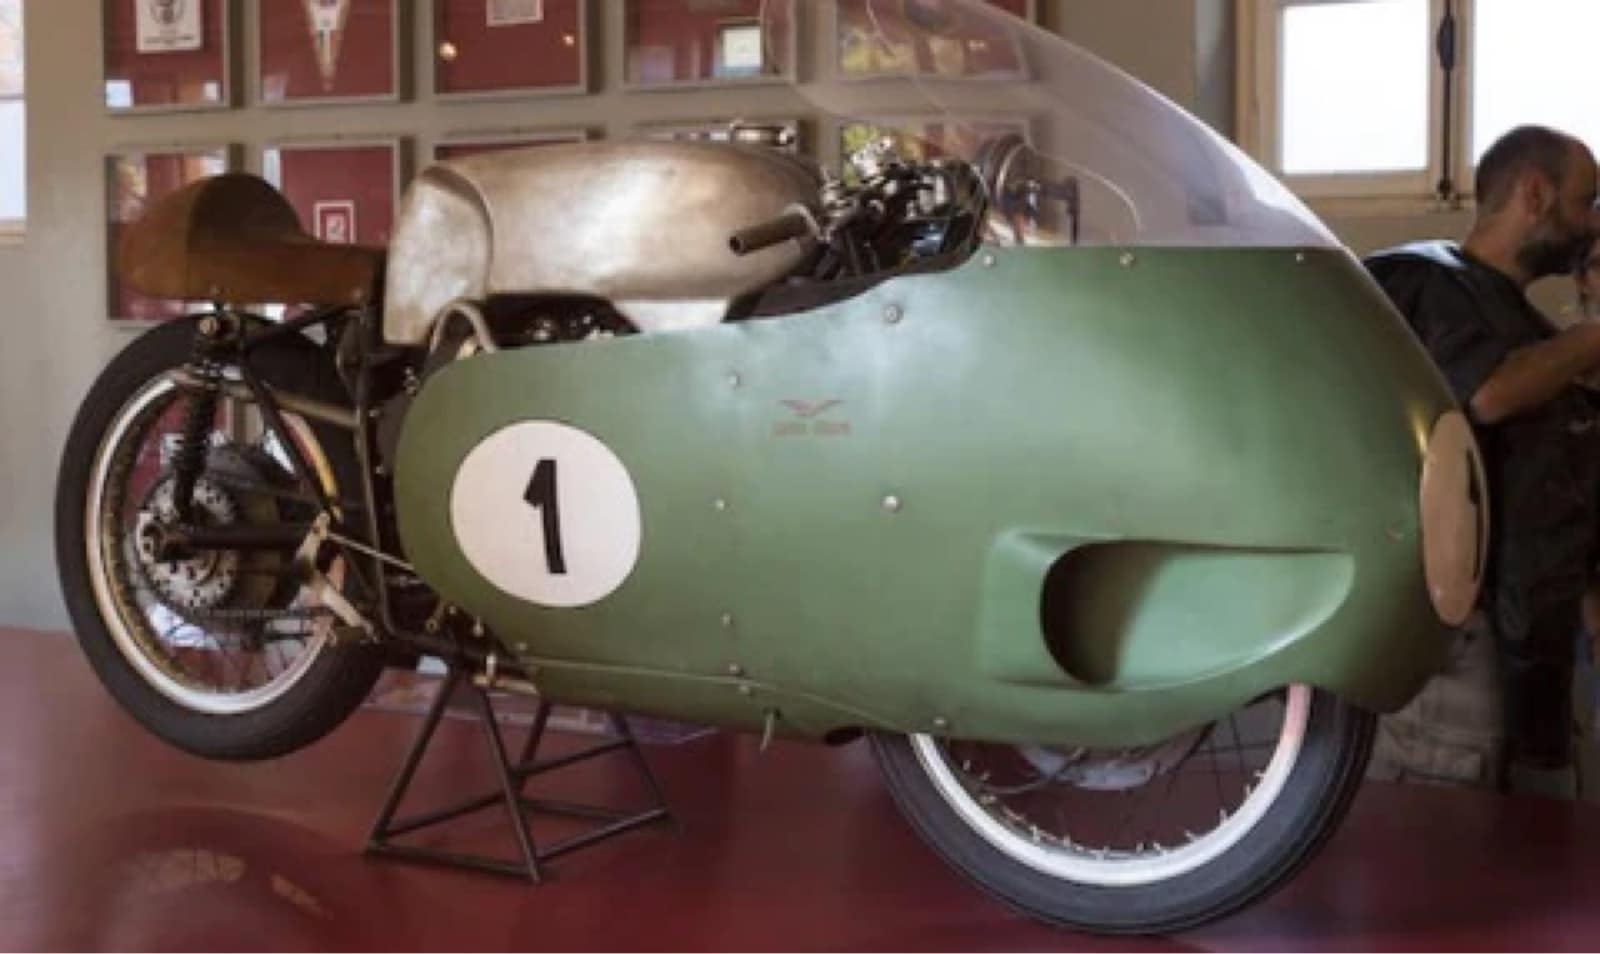 Honda Monkey Racer replica